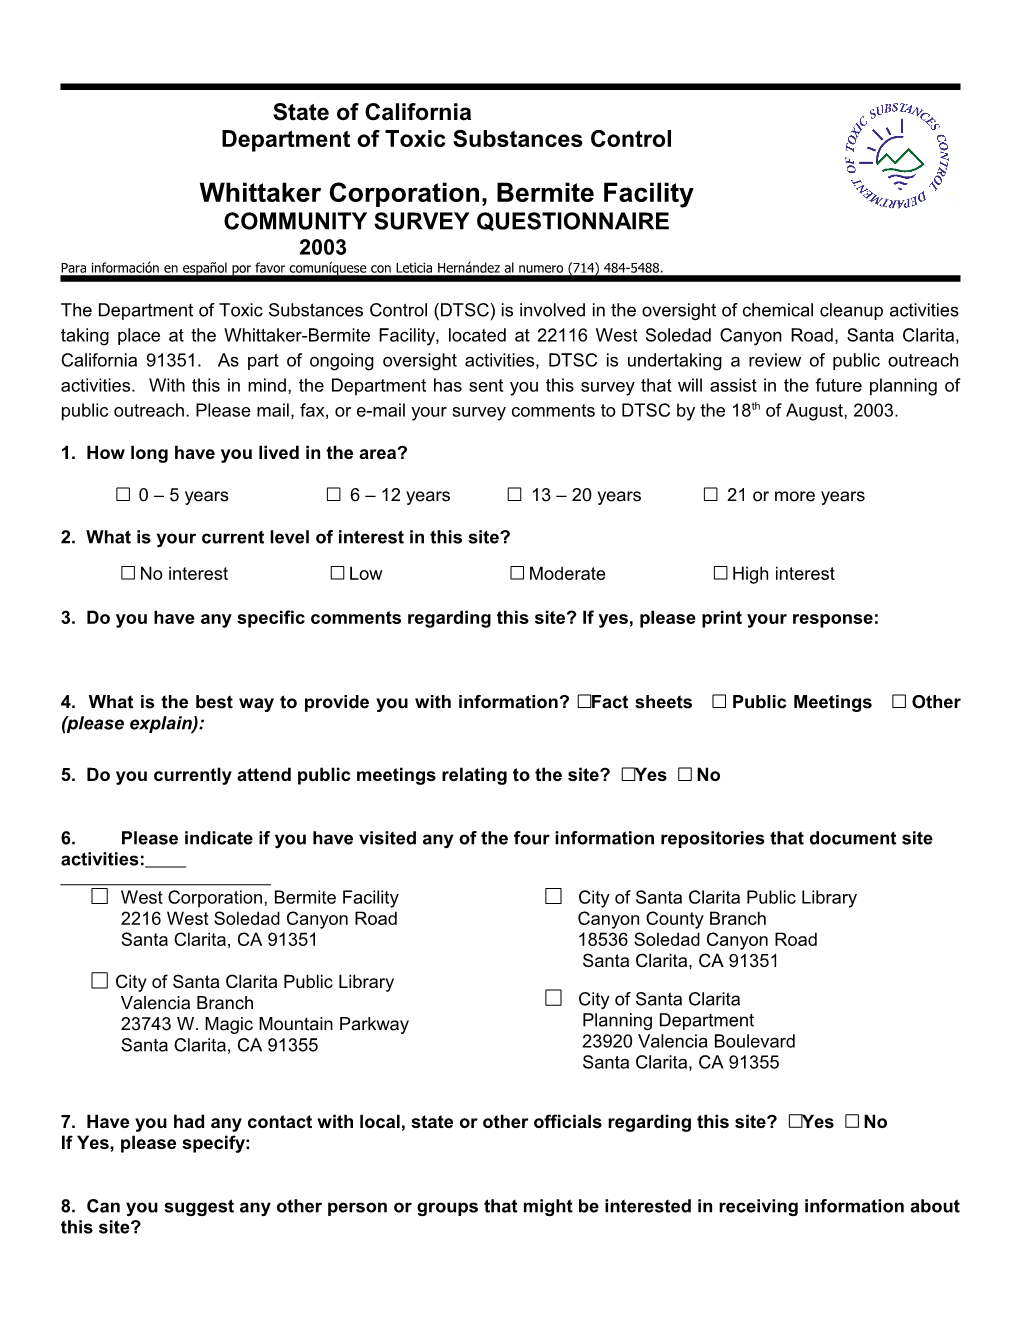 Whittaker-Bermite Facility Community Survey Questionnaire